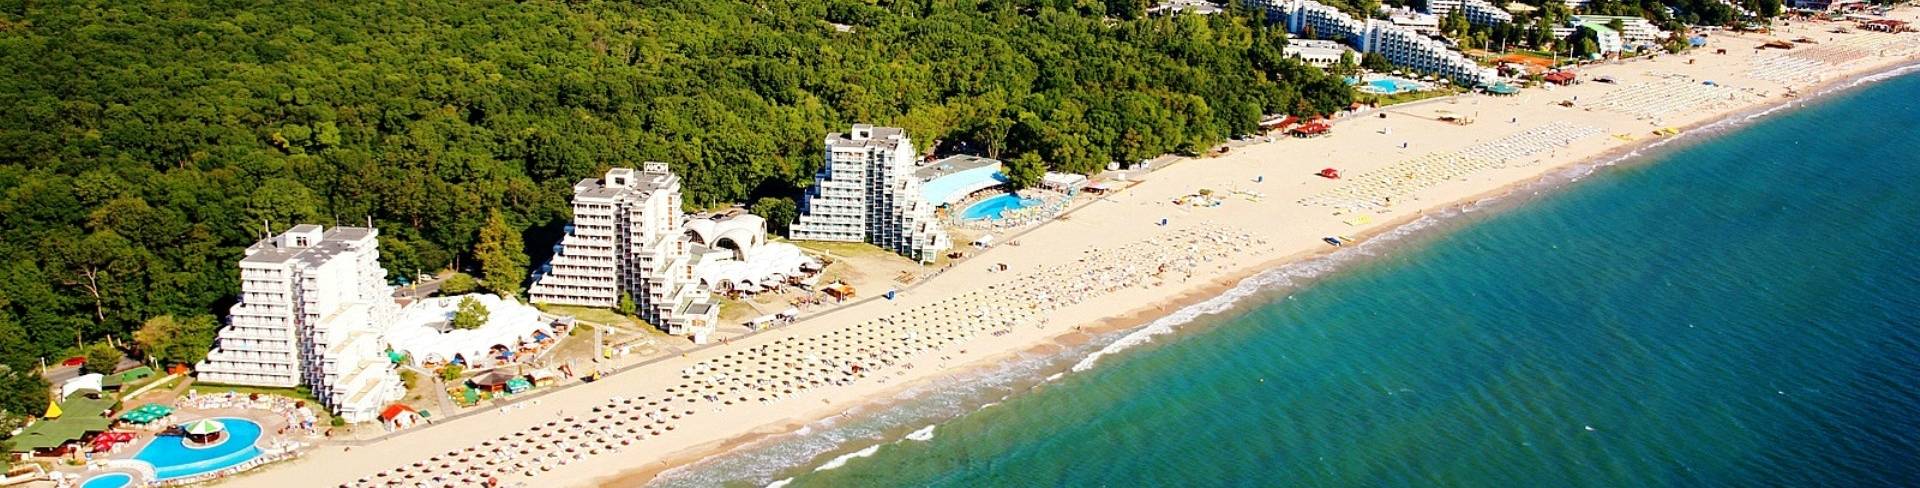 Албена - пляжный курорт в Болгарии